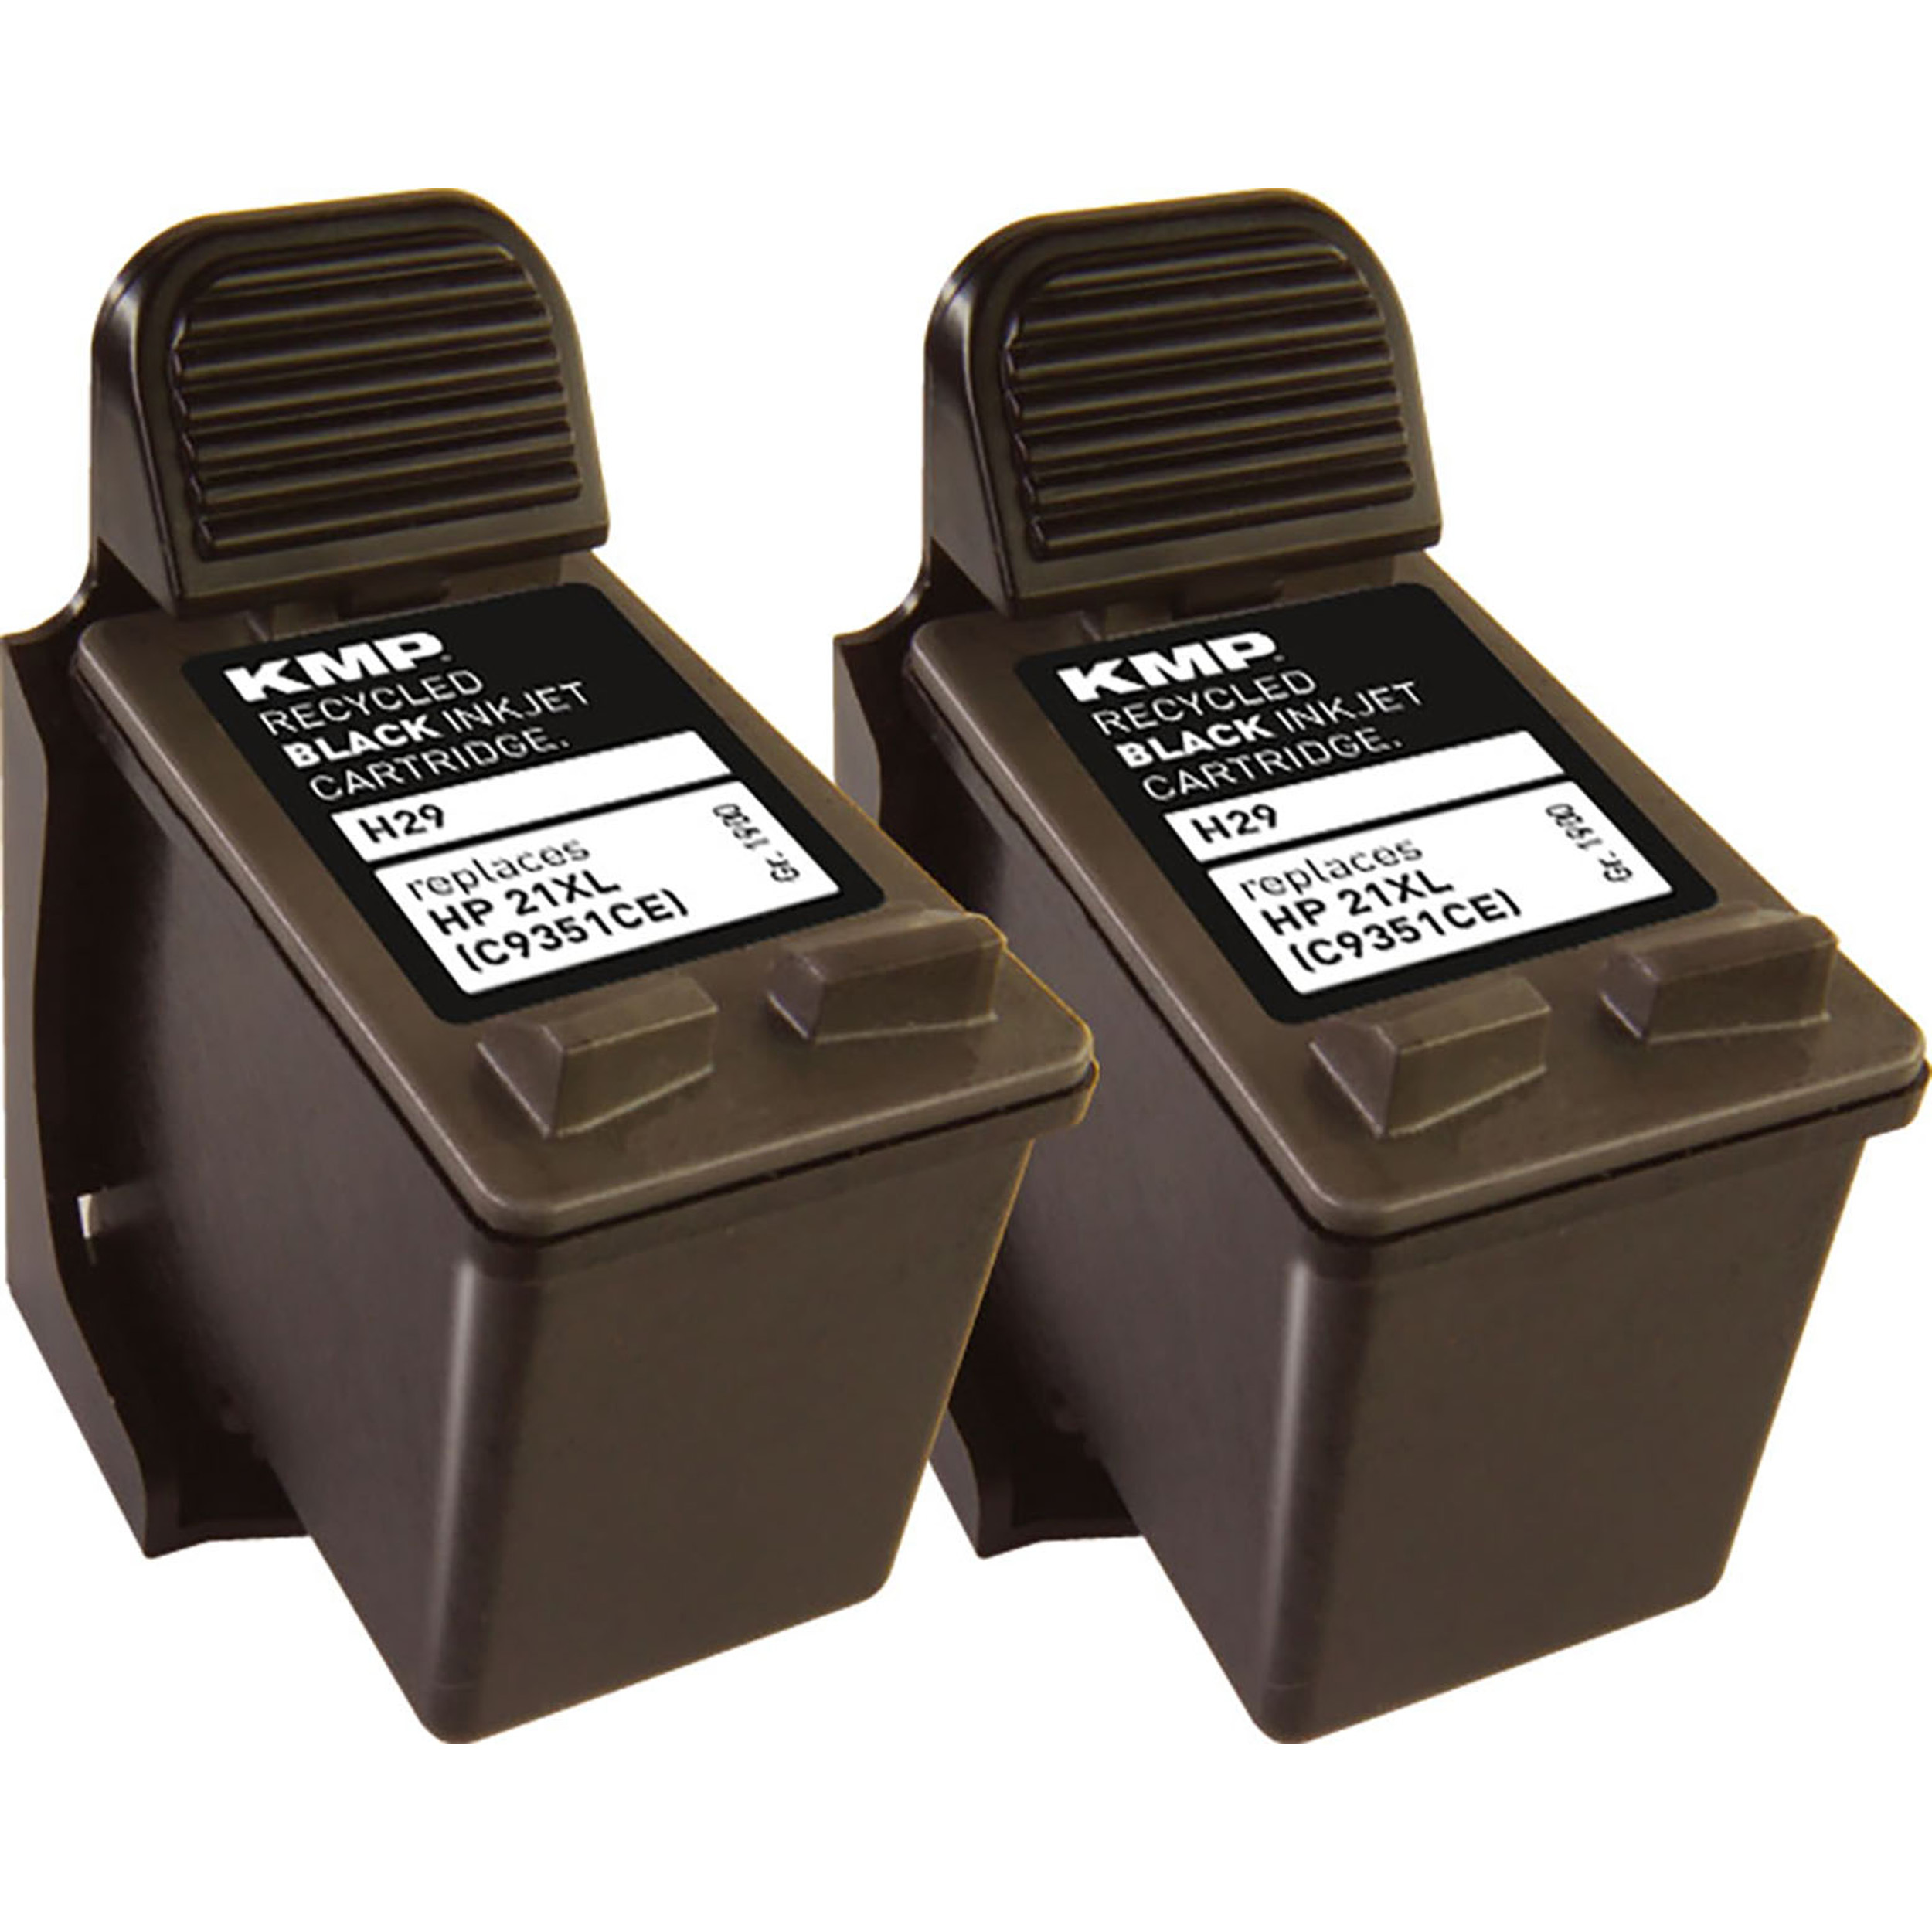 KMP Tintenpatrone für HP 21XL Cartridge (C9351CE) Black Doublepack schwarz Ink (C9351CE)